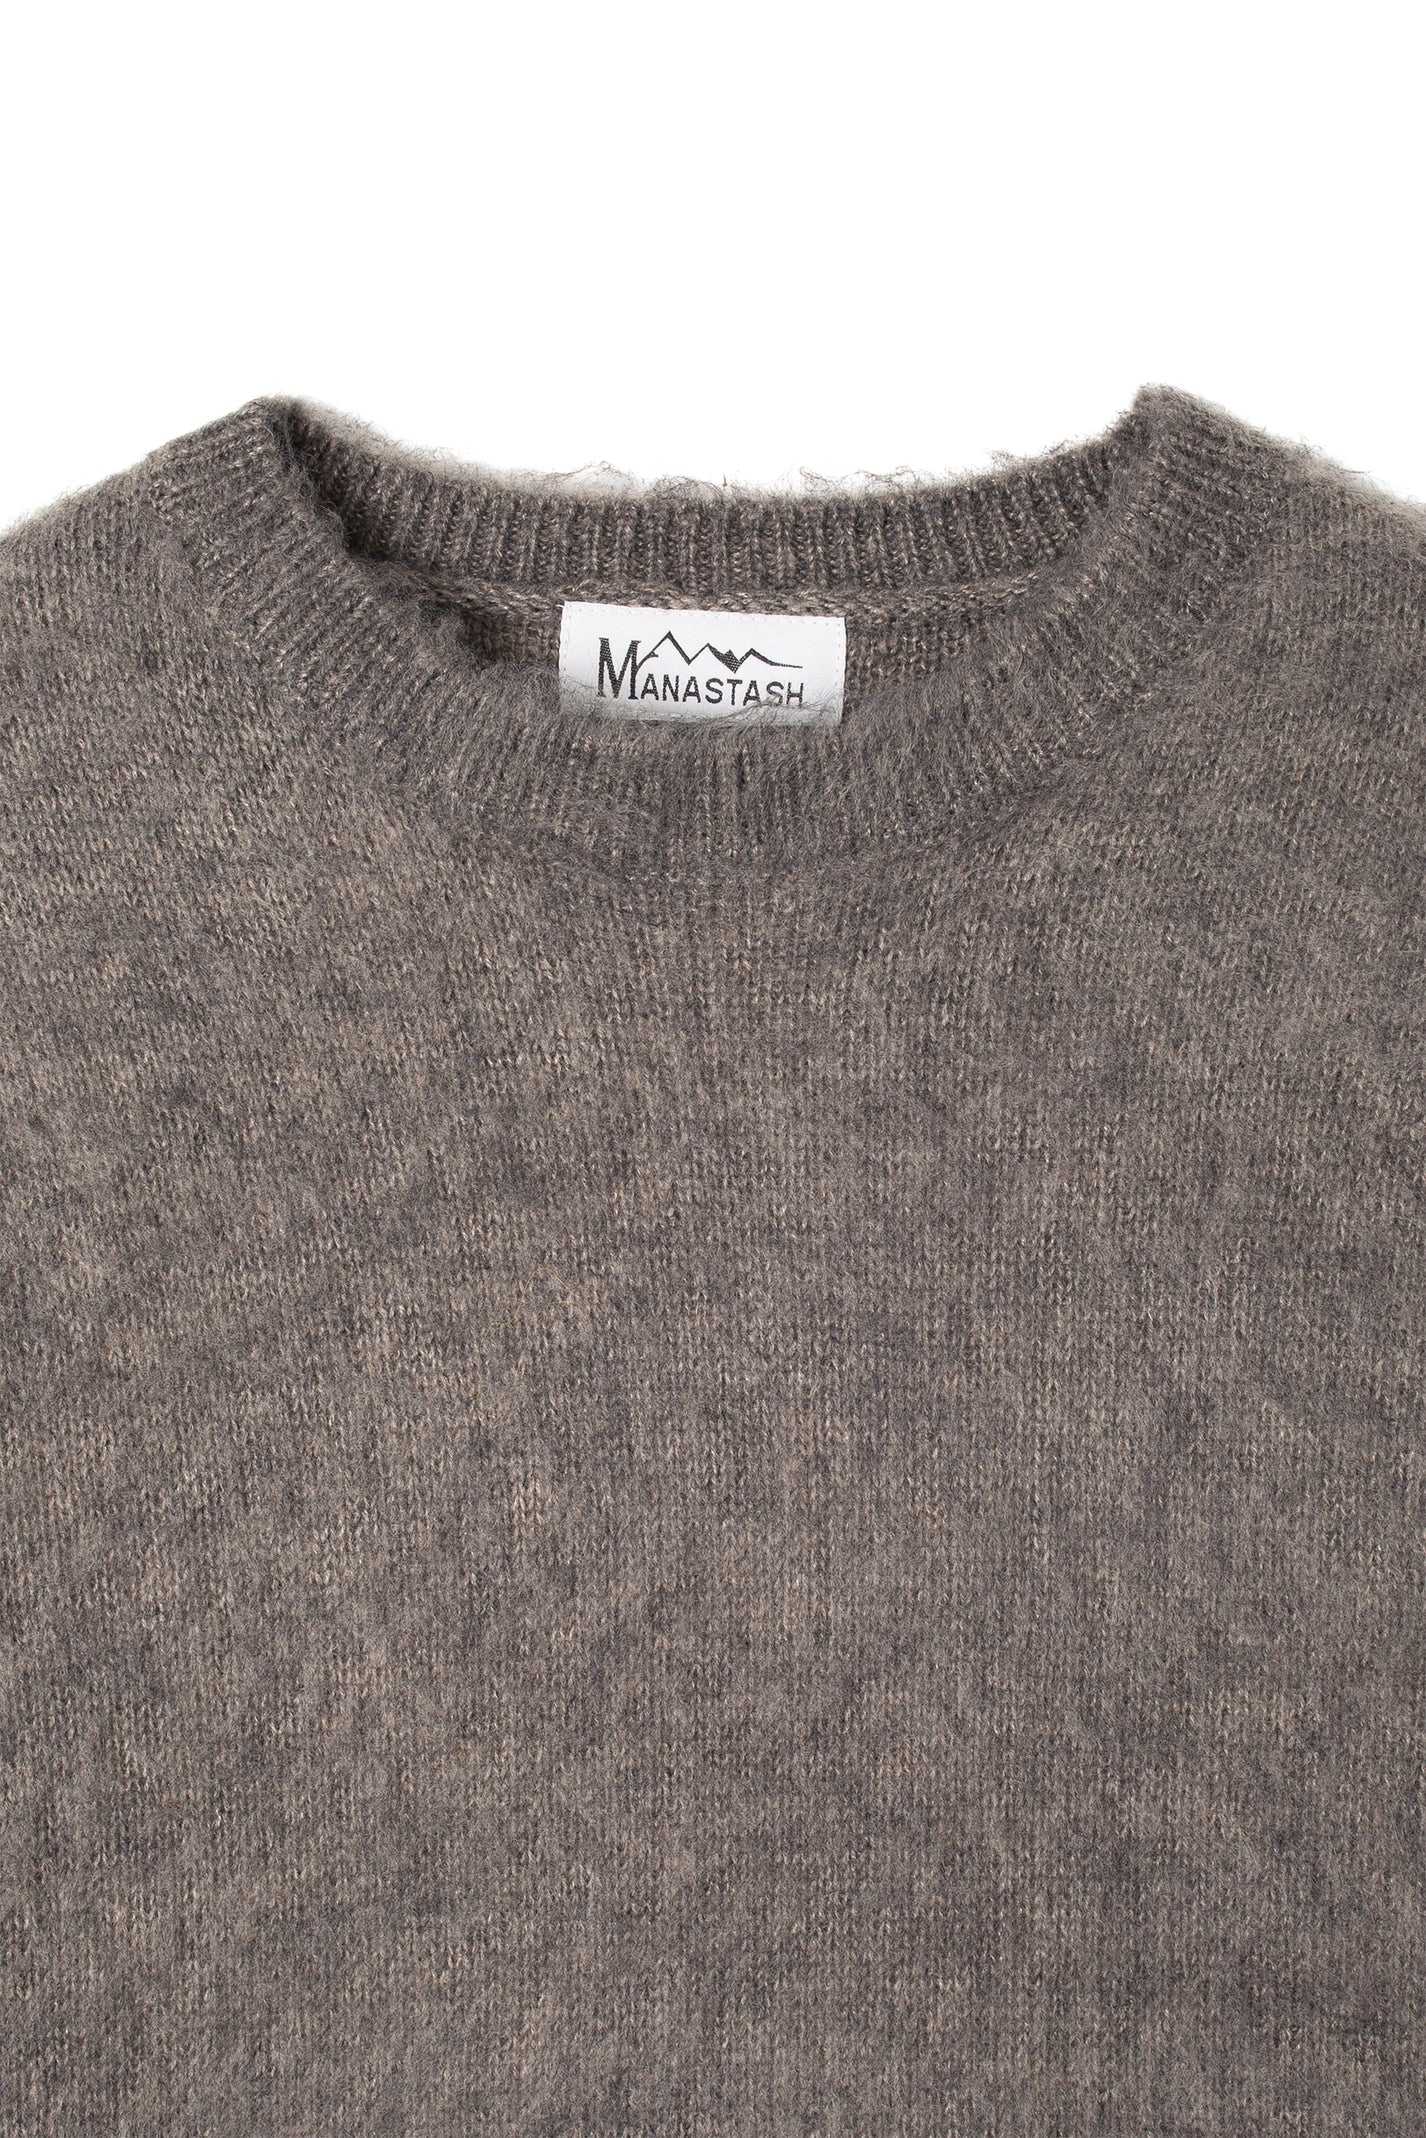 Manastash - Aberdeen Sweater in Gray - Space Camp